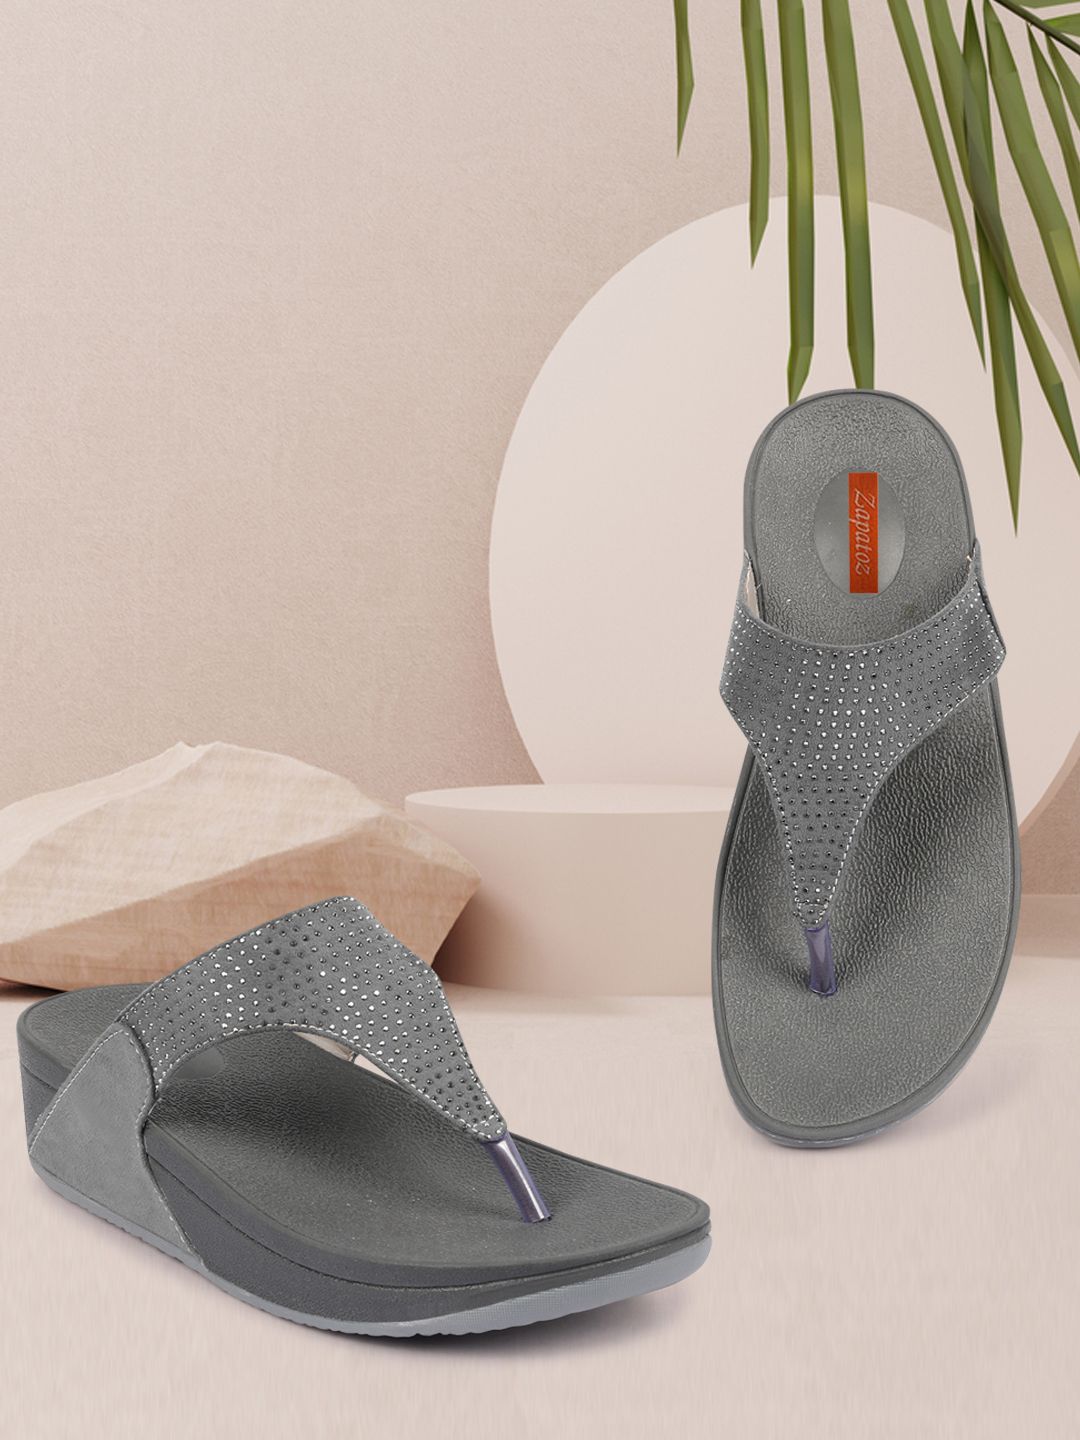 ZAPATOZ Grey PU Flatform Sandals Price in India